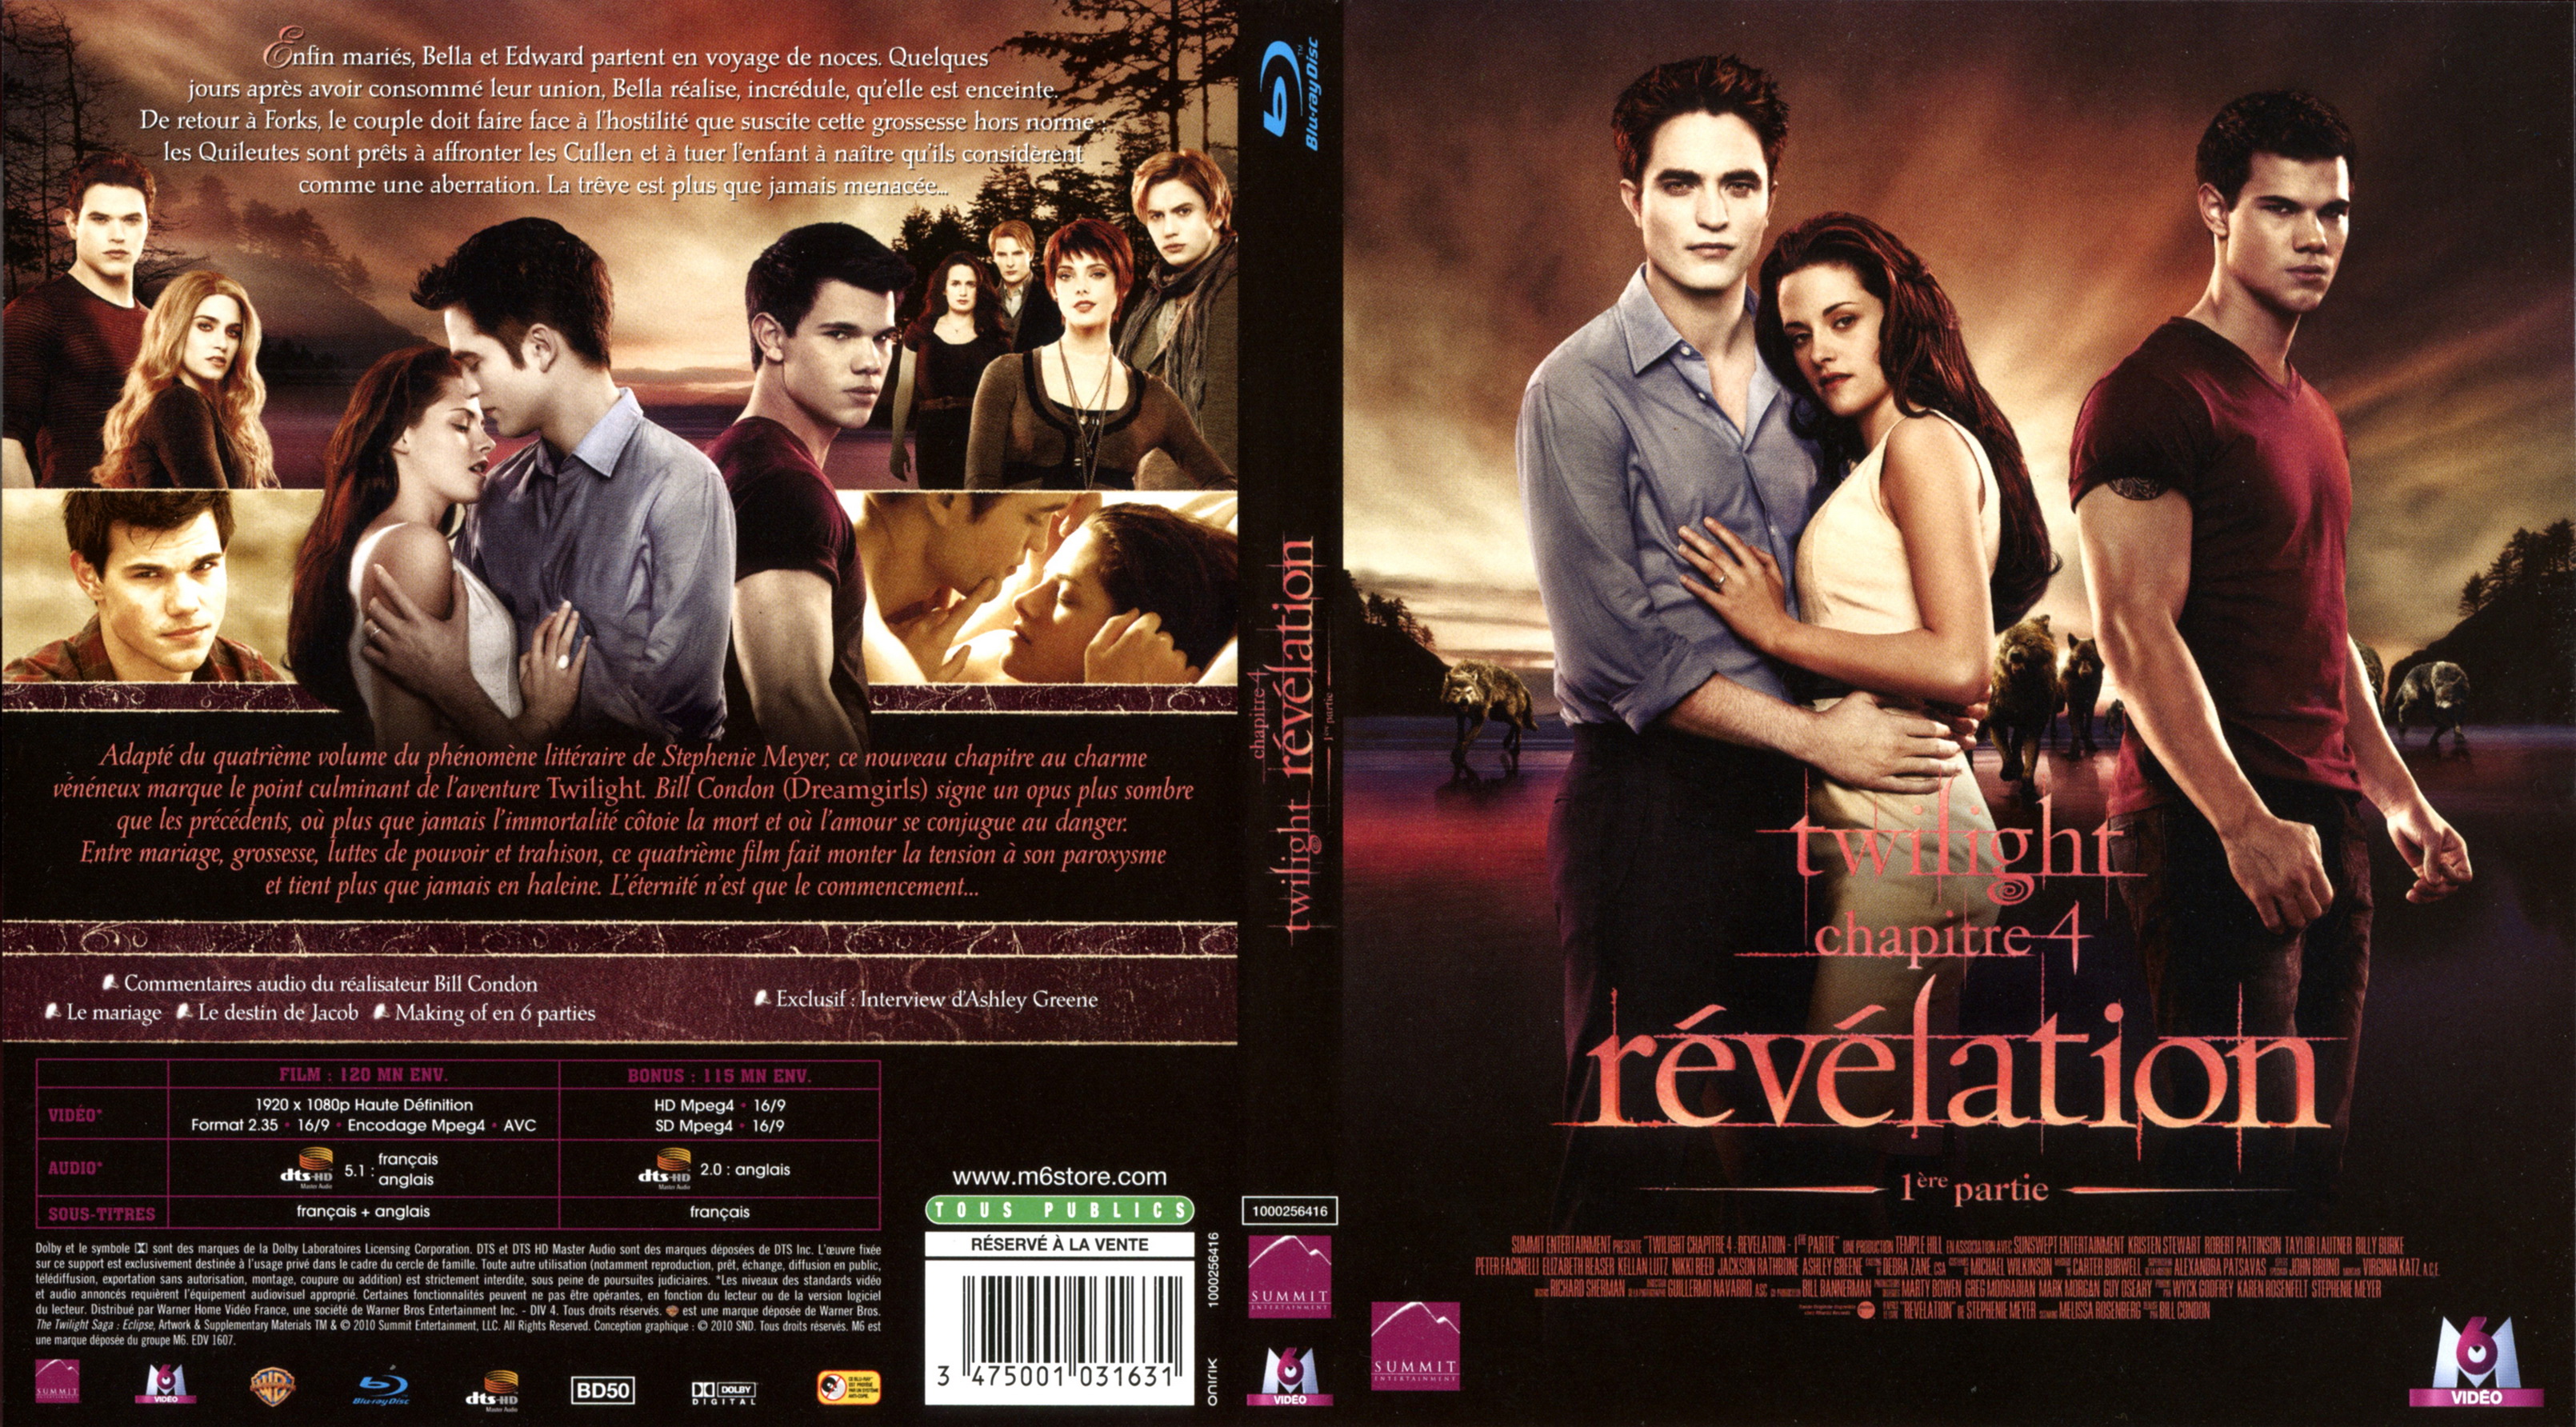 Jaquette DVD Twilight Chapitre 4 : Rvlation 1re partie (BLU-RAY)